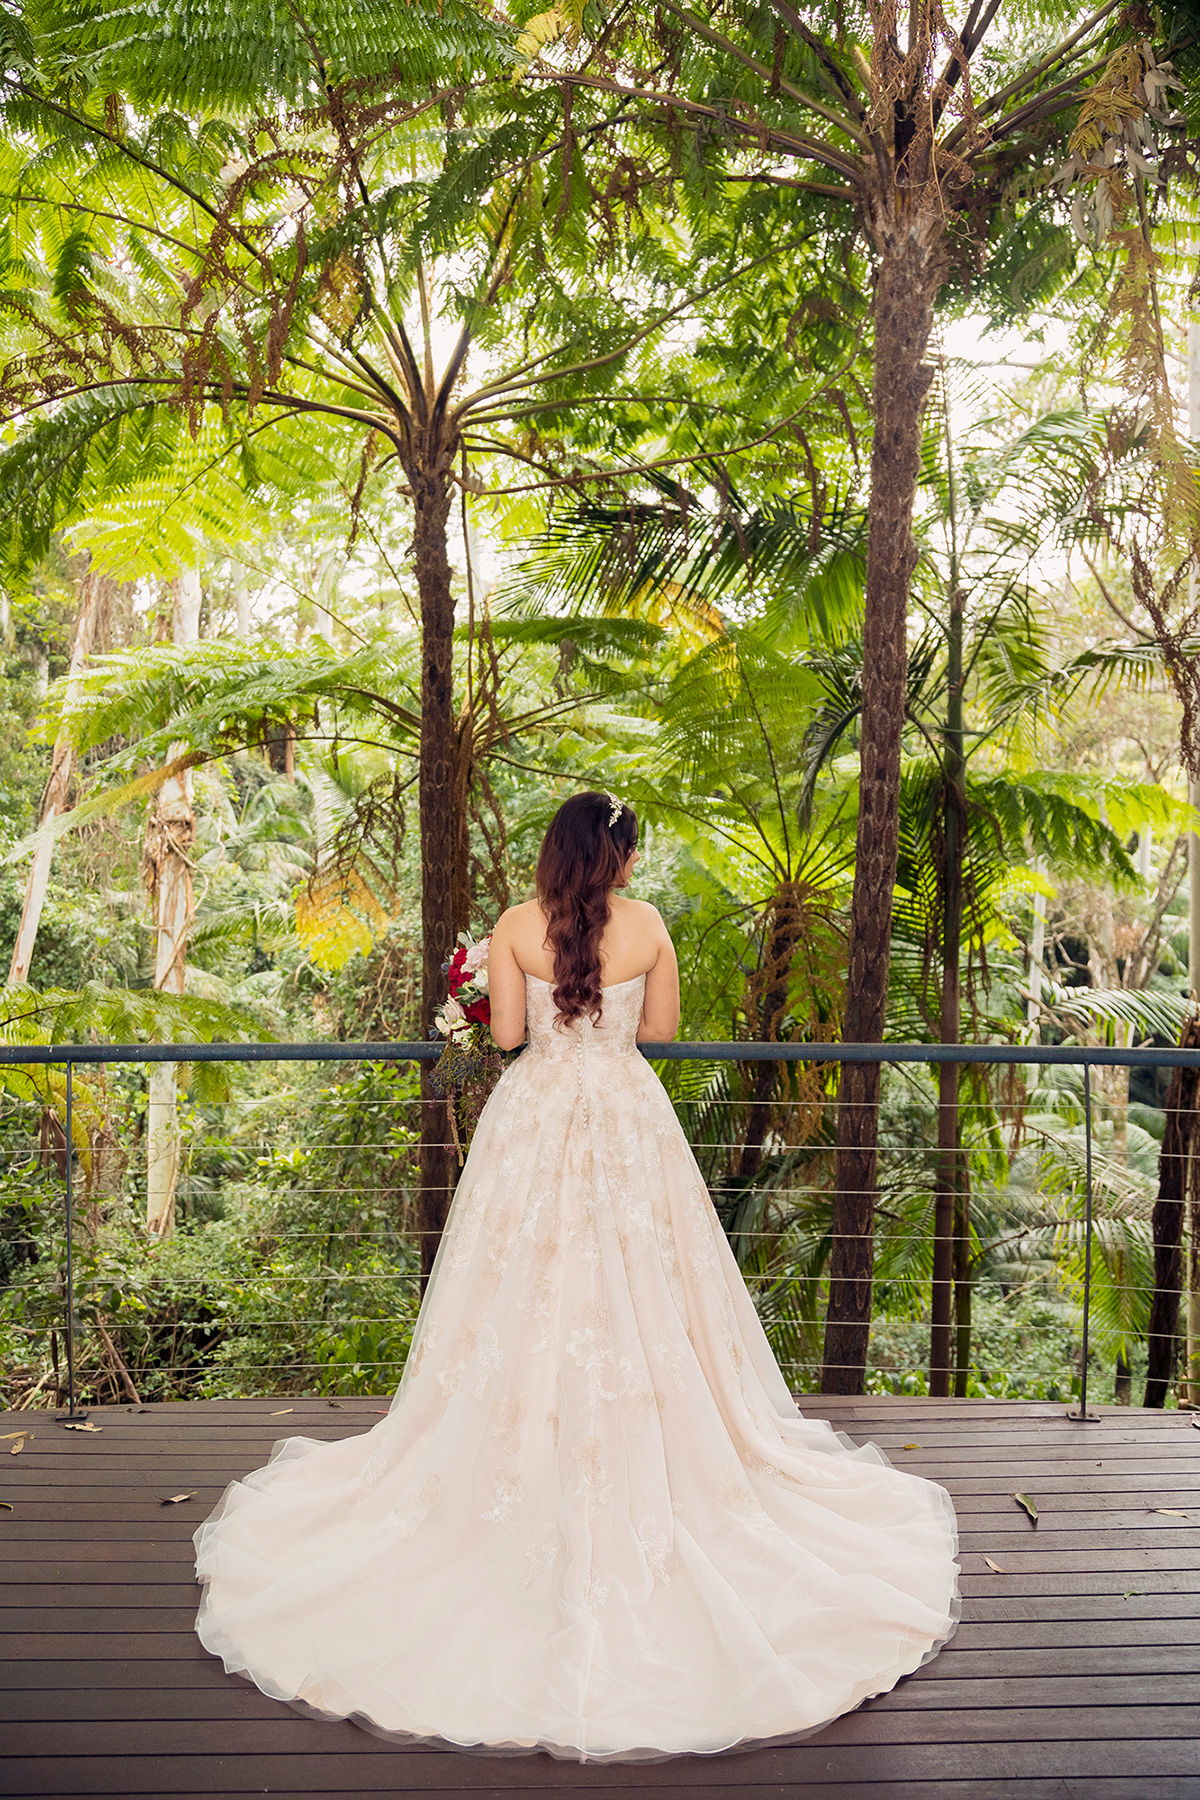 Chemere_Matthew_Enchanted-Forest-Wedding_DK-Photography_SBS_015